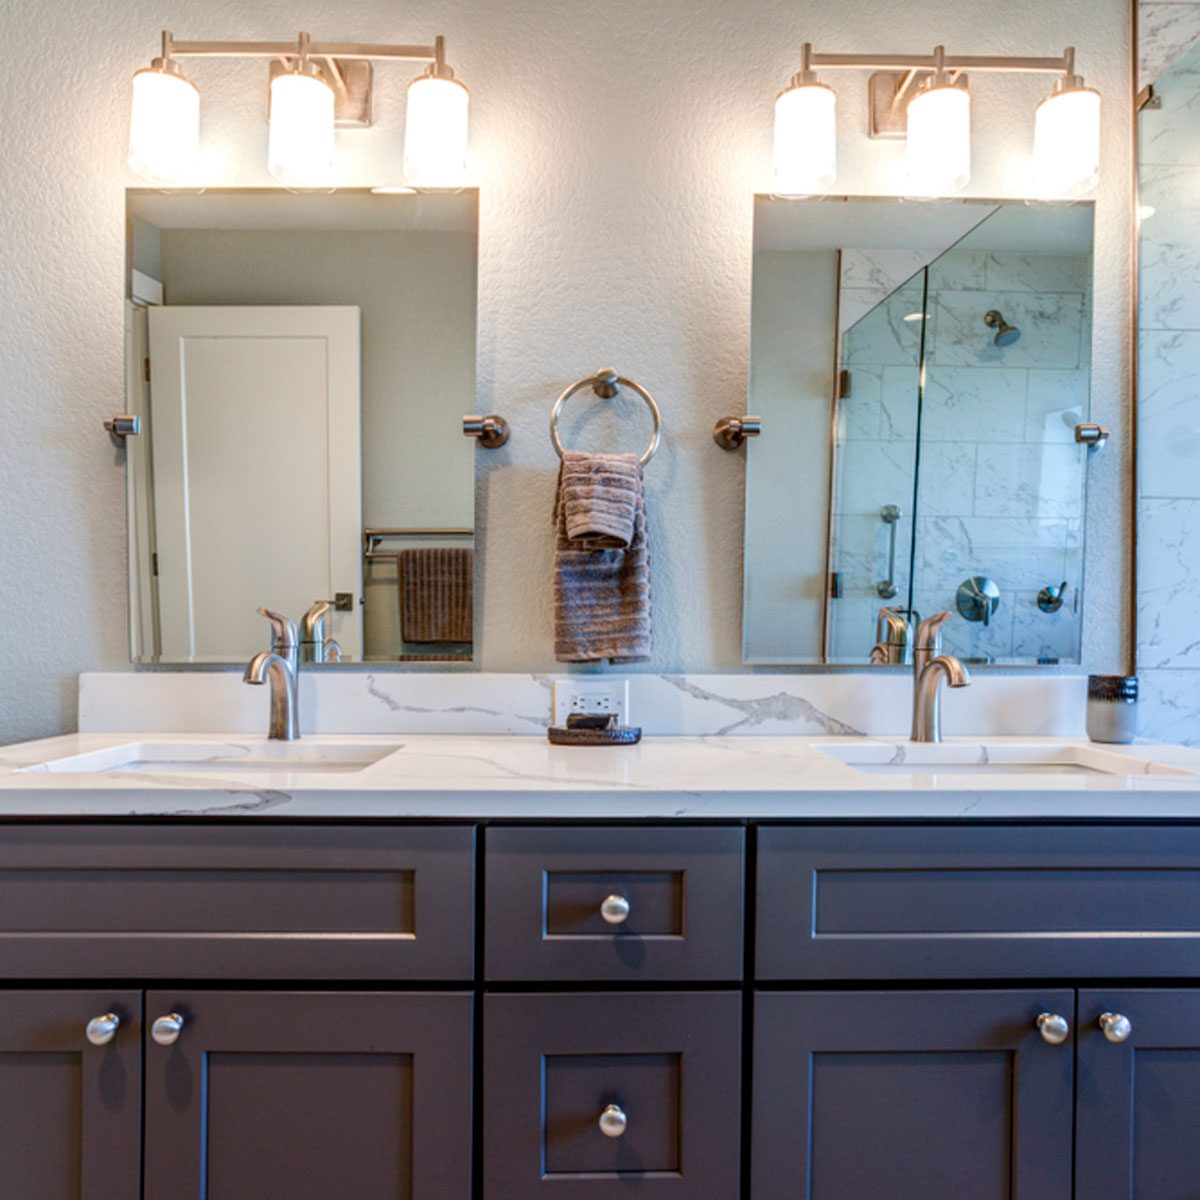 Home Designers Reveal 10 Details That Make a Bathroom Beautiful ...